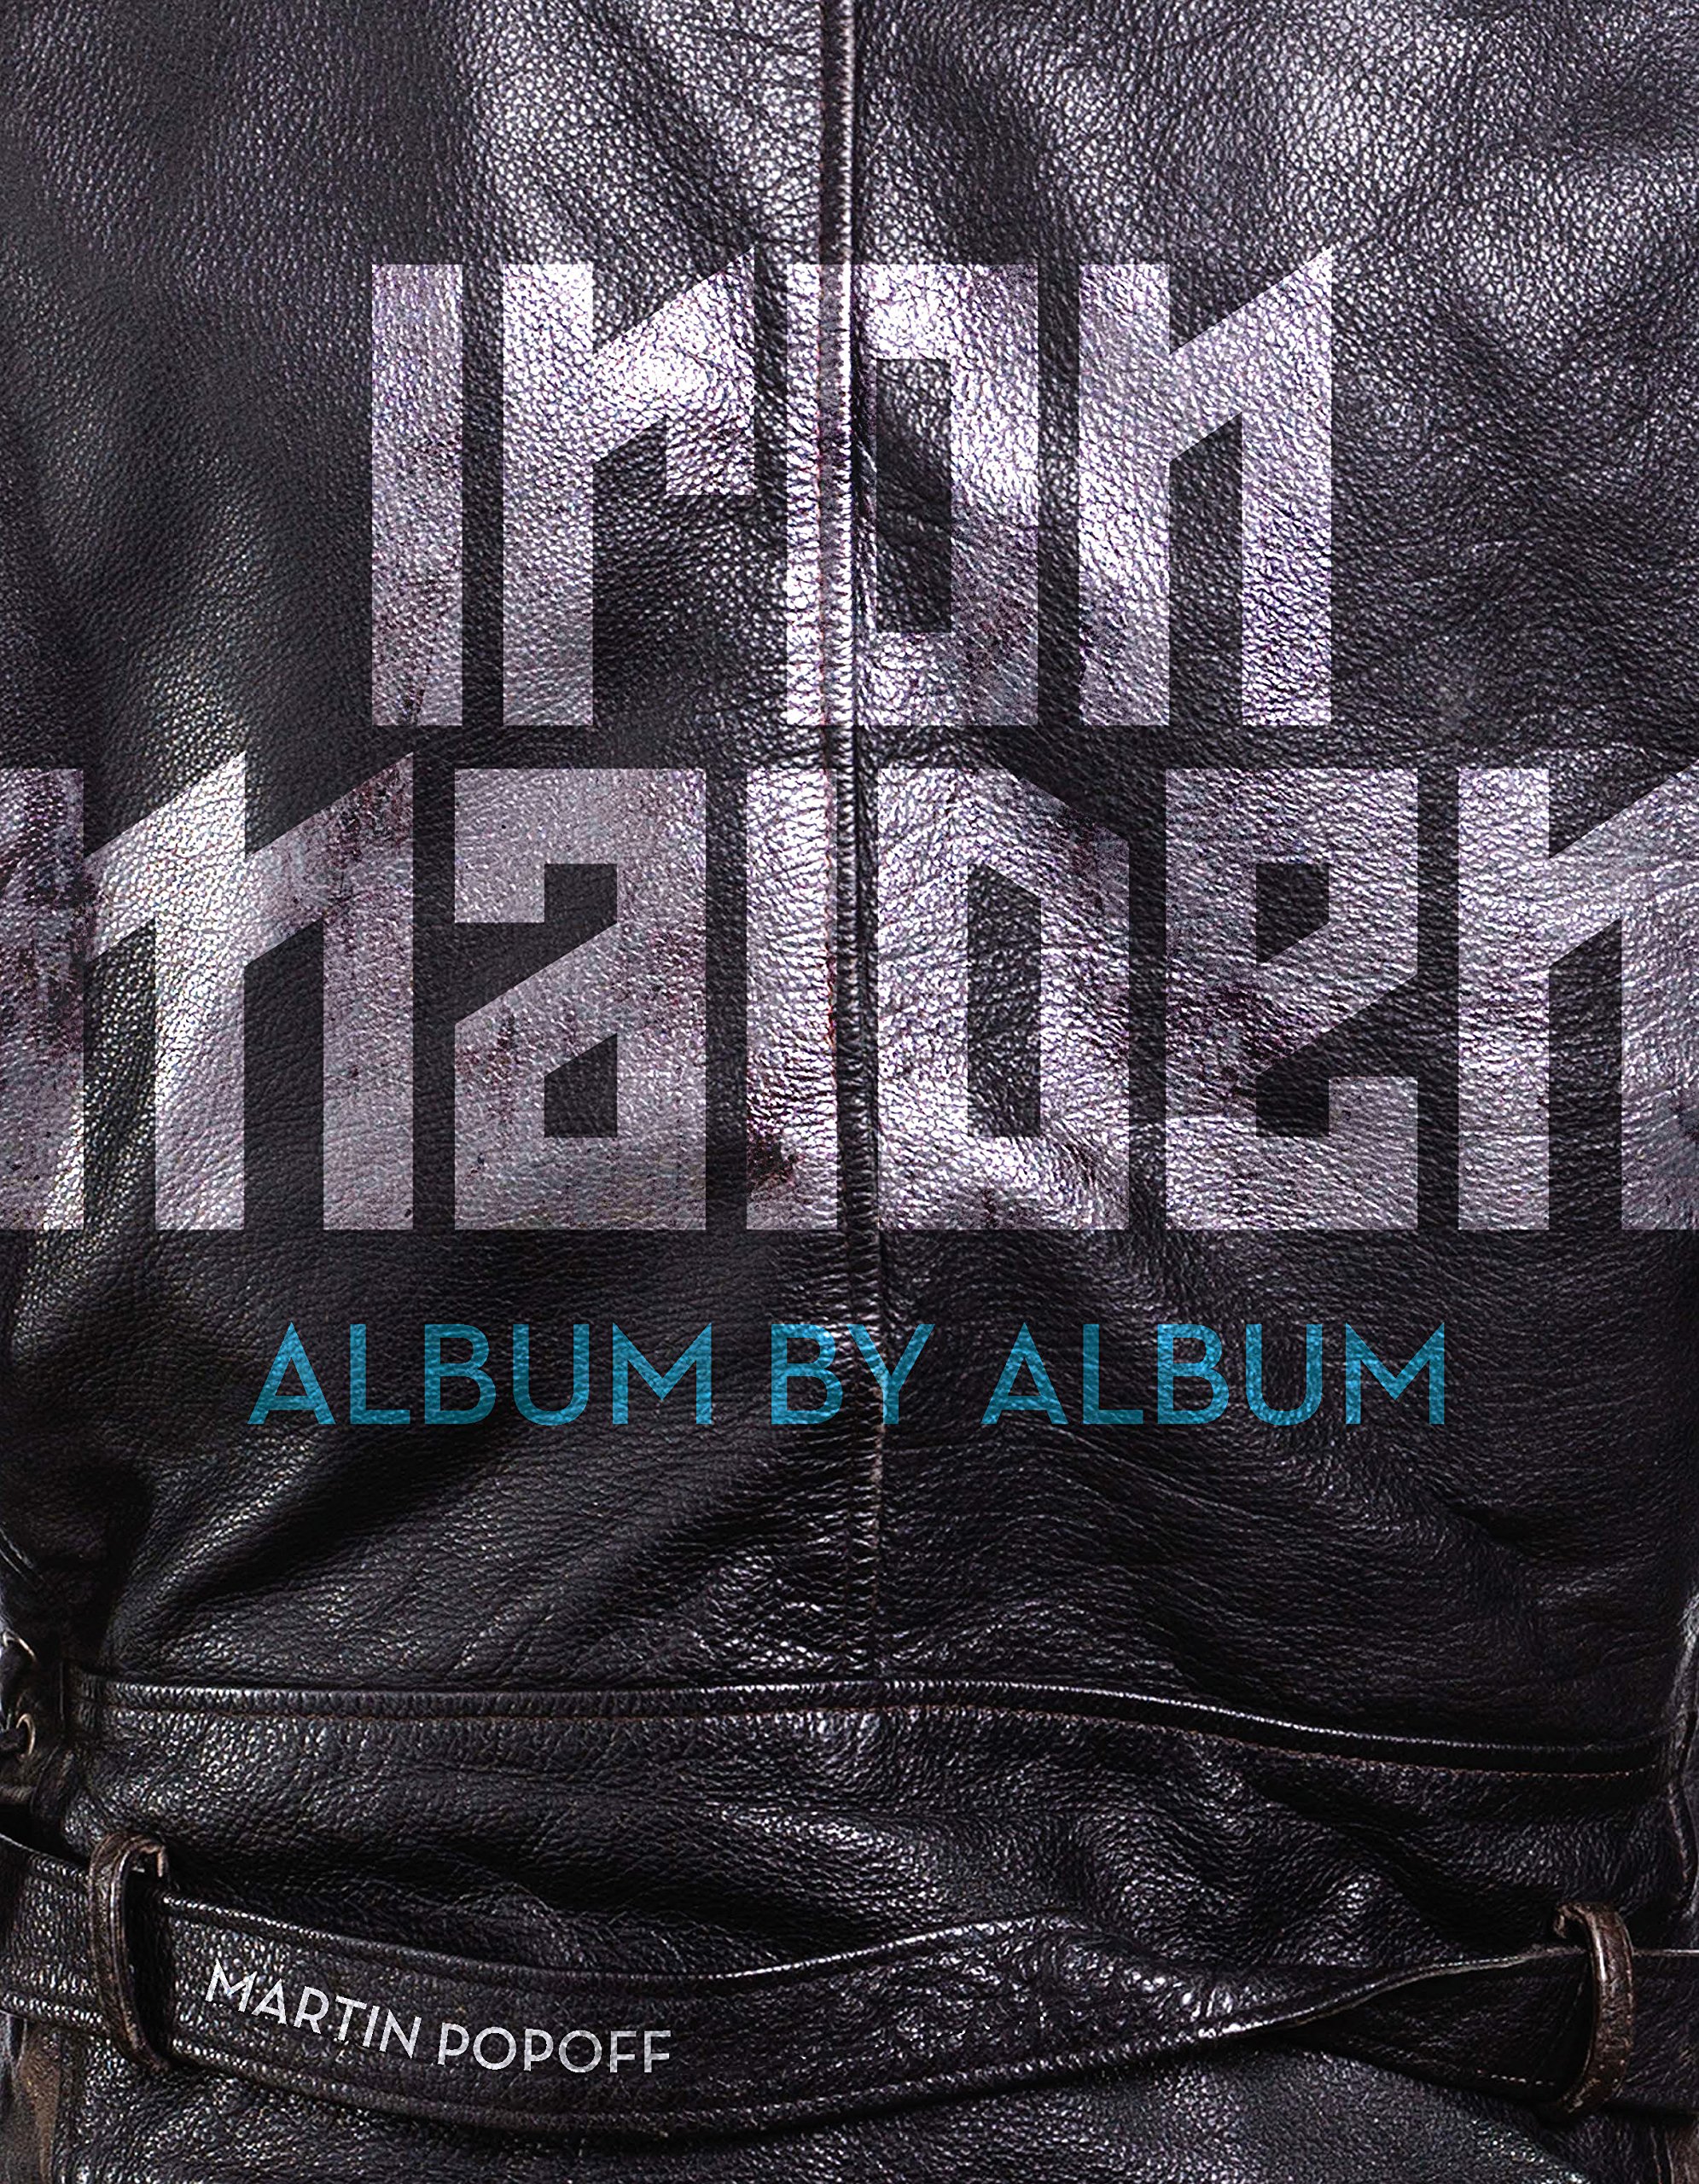 Martin Popoff Delivers With Iron Maiden: Album By Album